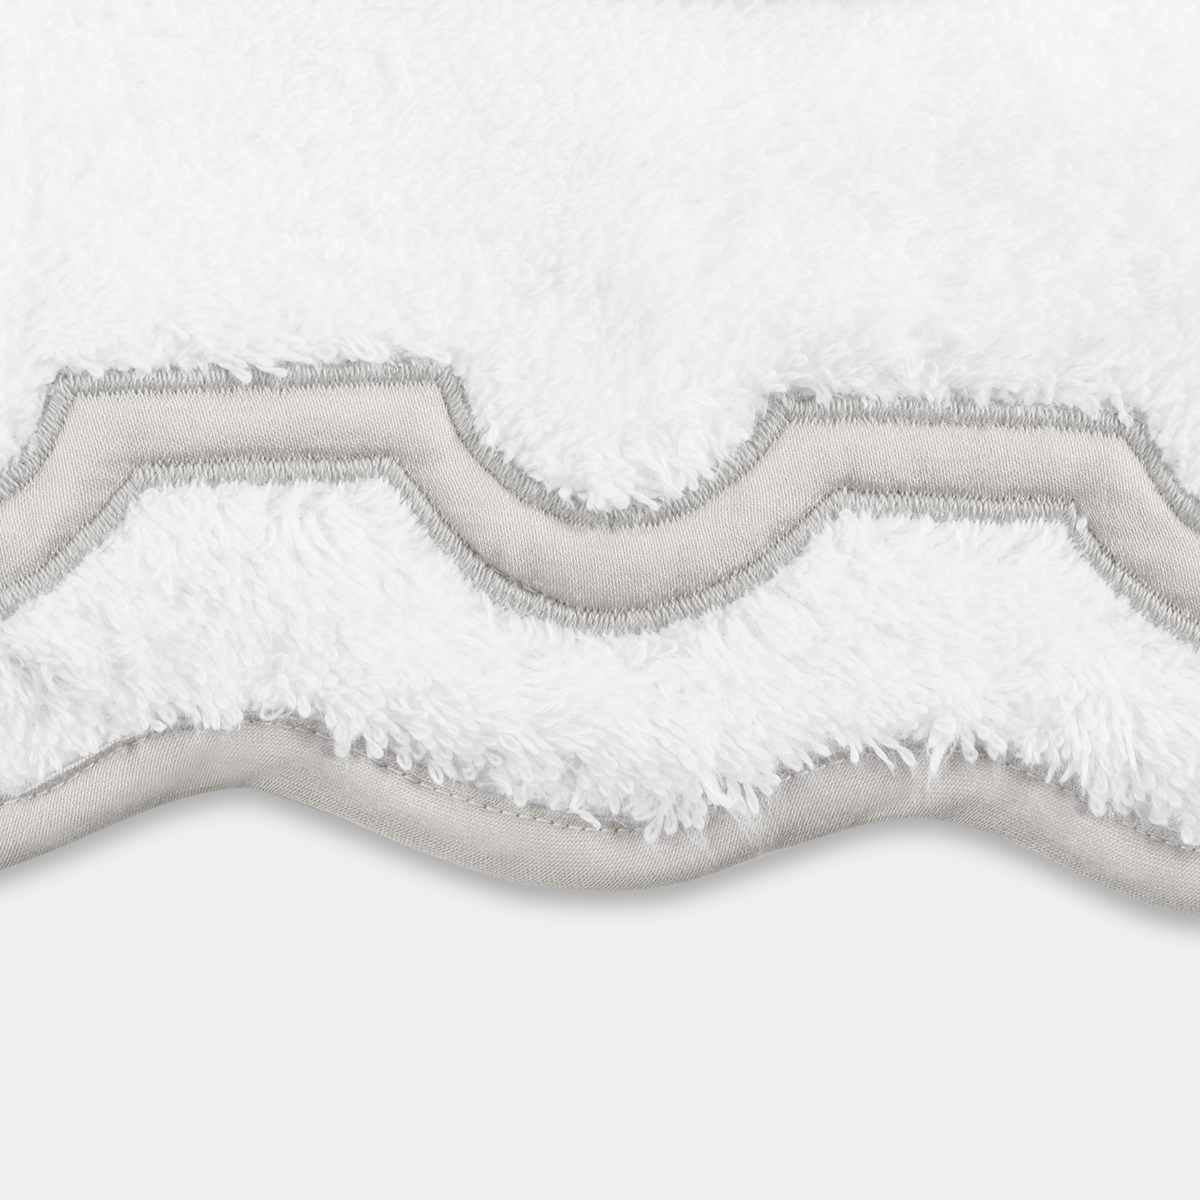 Swatch Sample of Matouk Mirasol Bath Towel in Silver Color